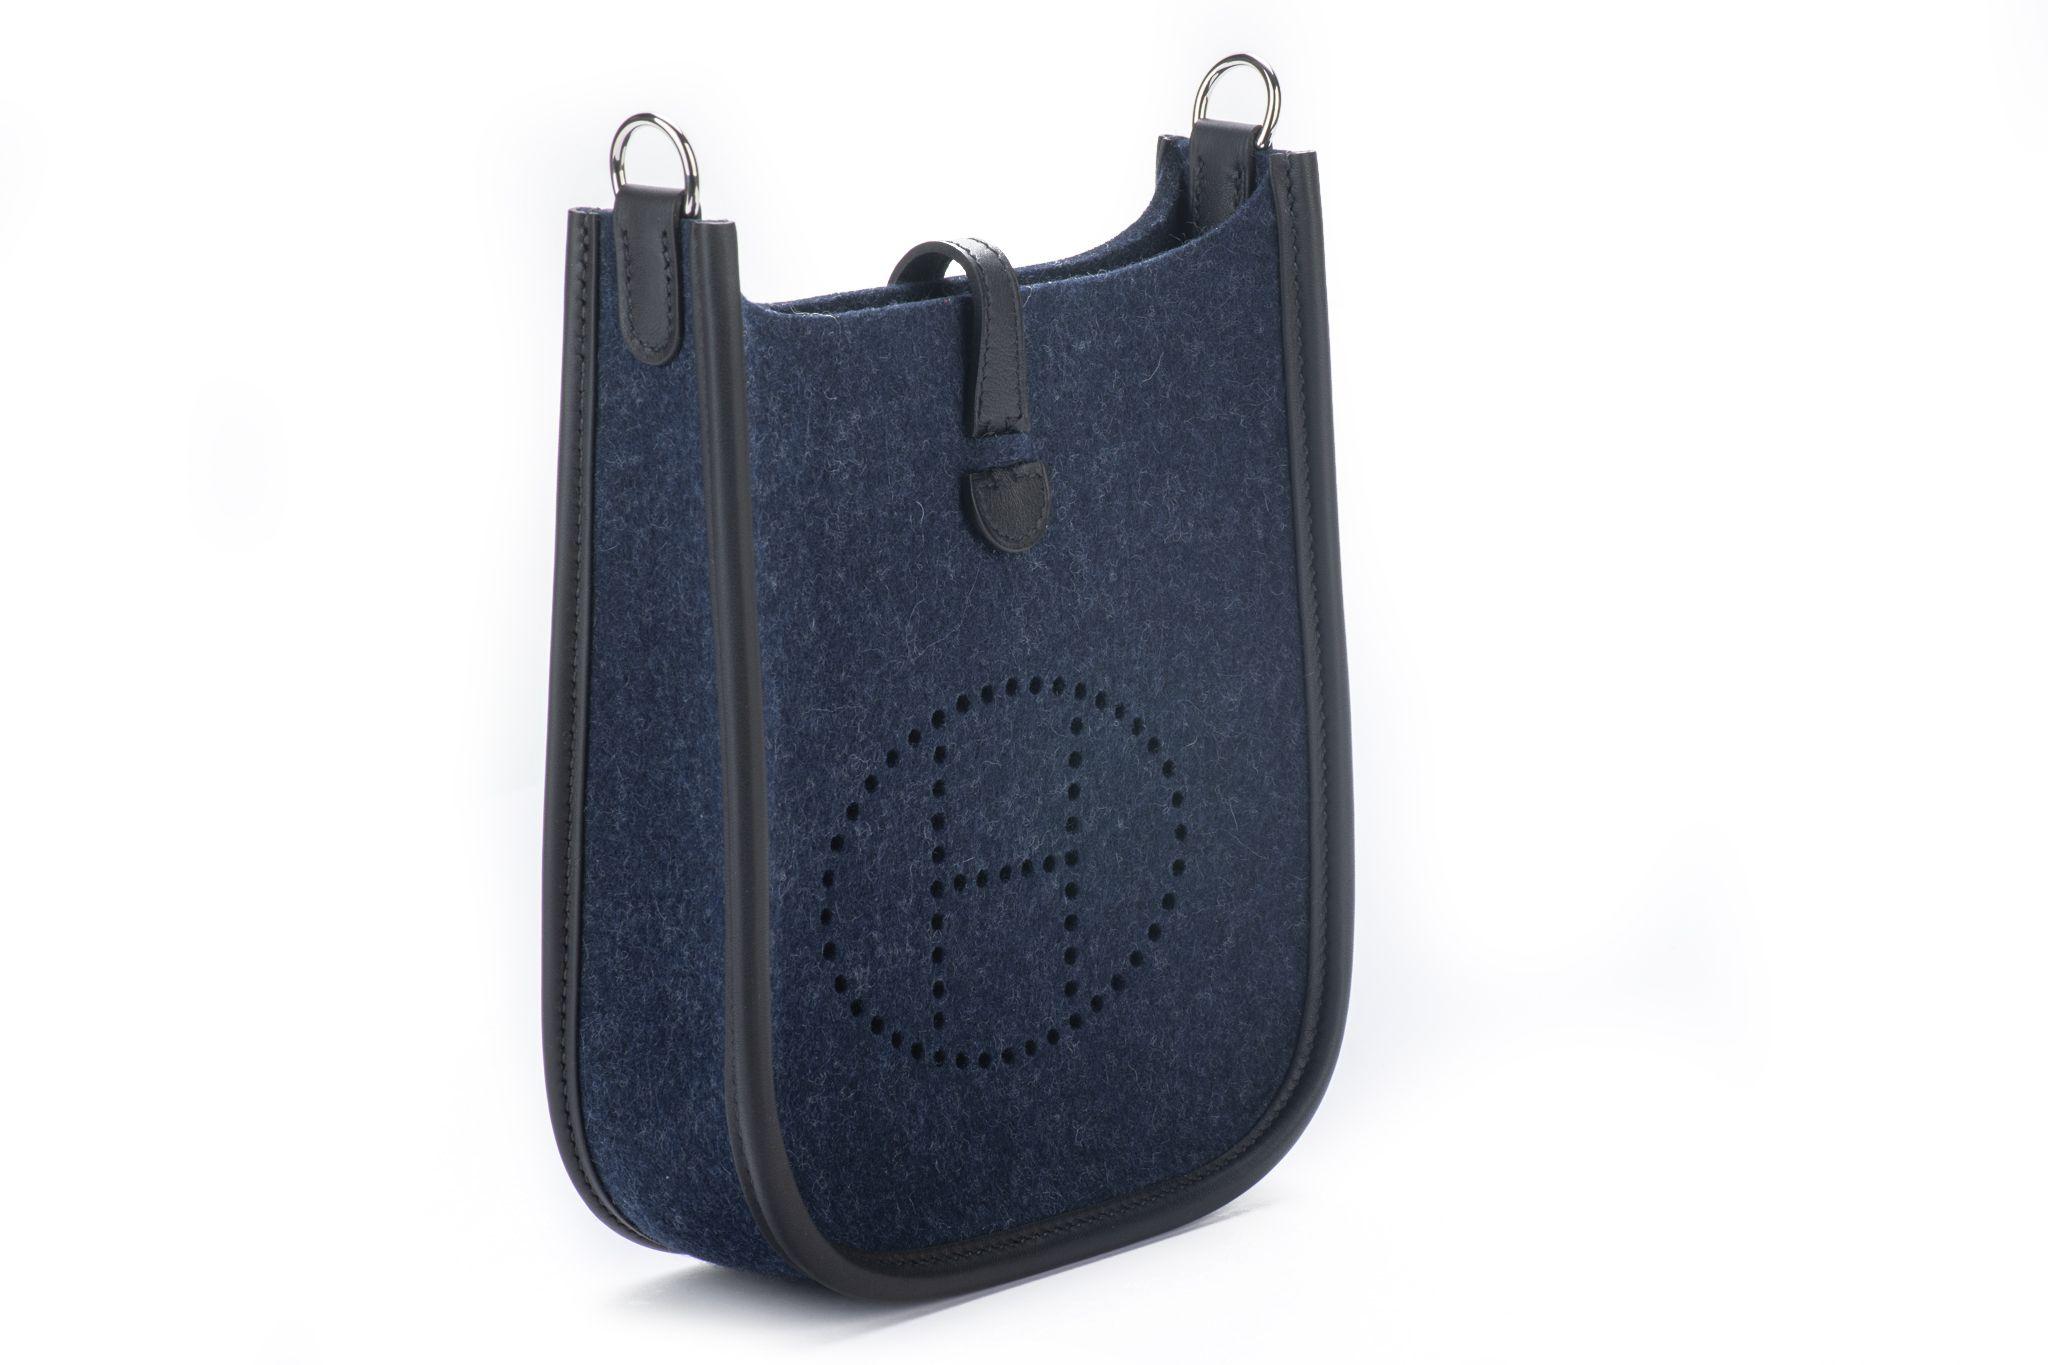 Hermès rare mini Evelyne shoulder bag in blue felt, black swift leather with palladium hardware. Never used. Dated 